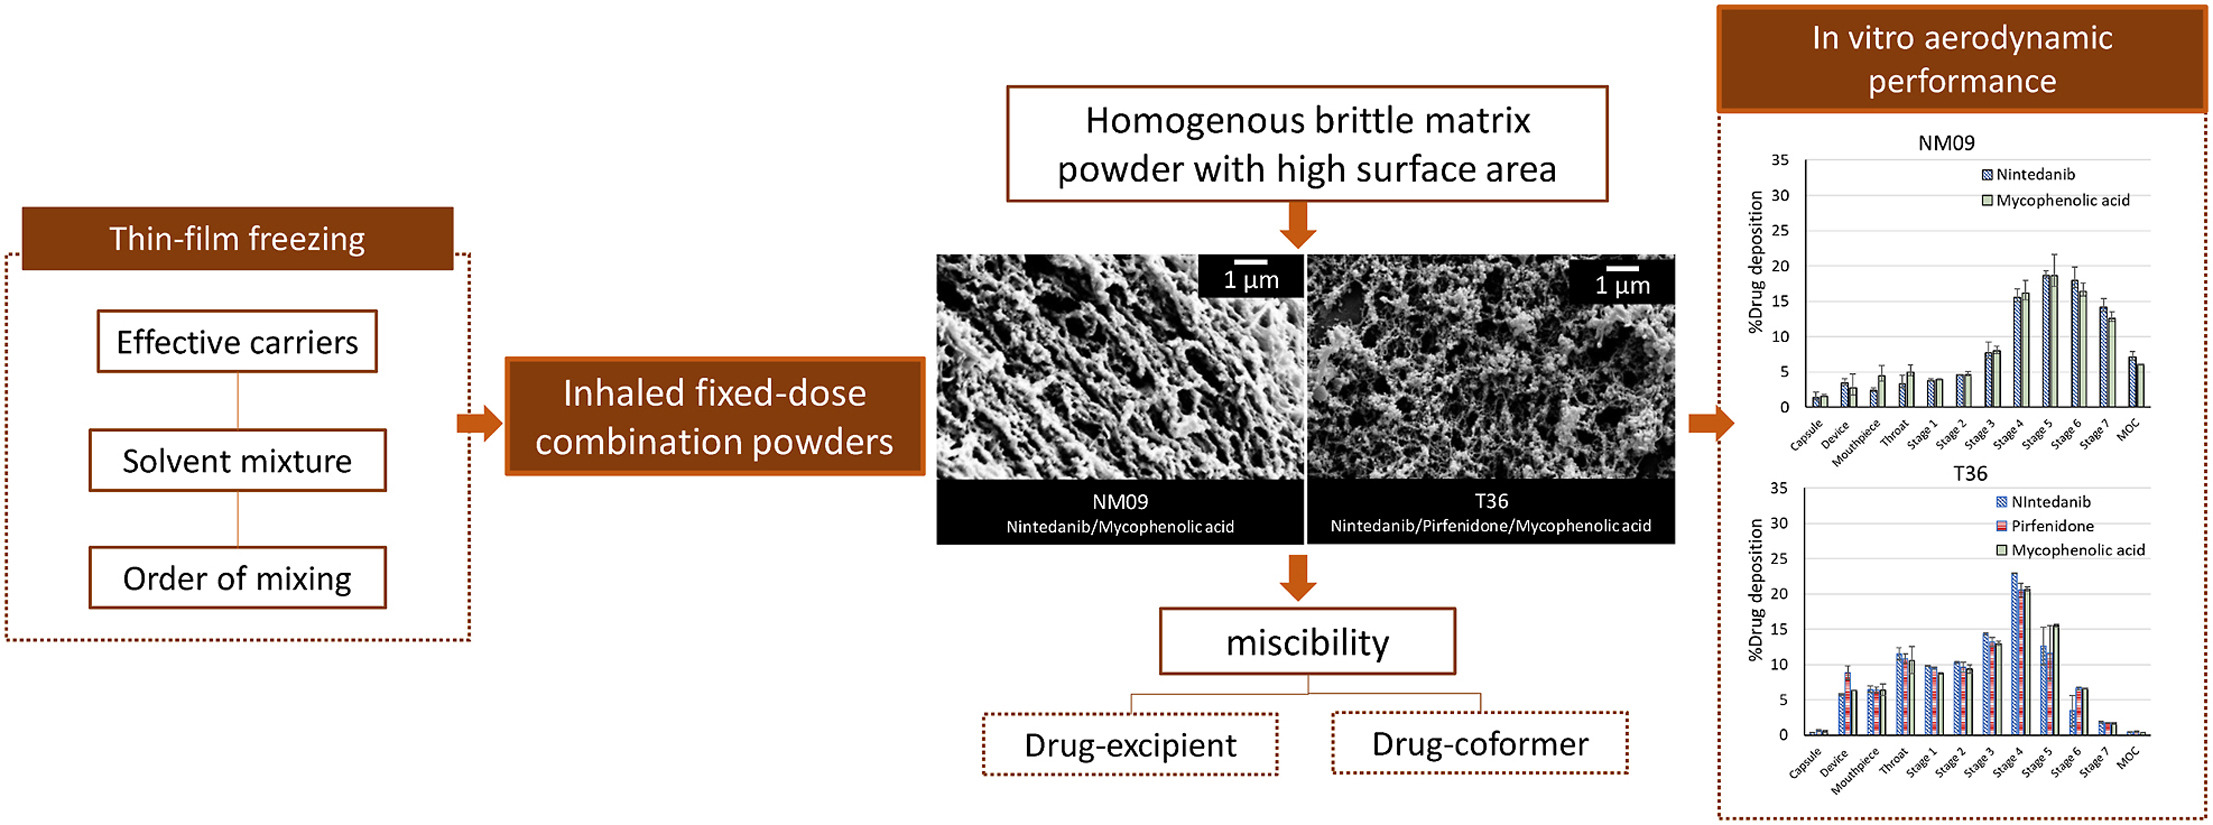 Fixed-dose dry powder for inhalation of nintedanib, pirfenidone and mycophenolic acid by thin-film freezing (TFF) technology